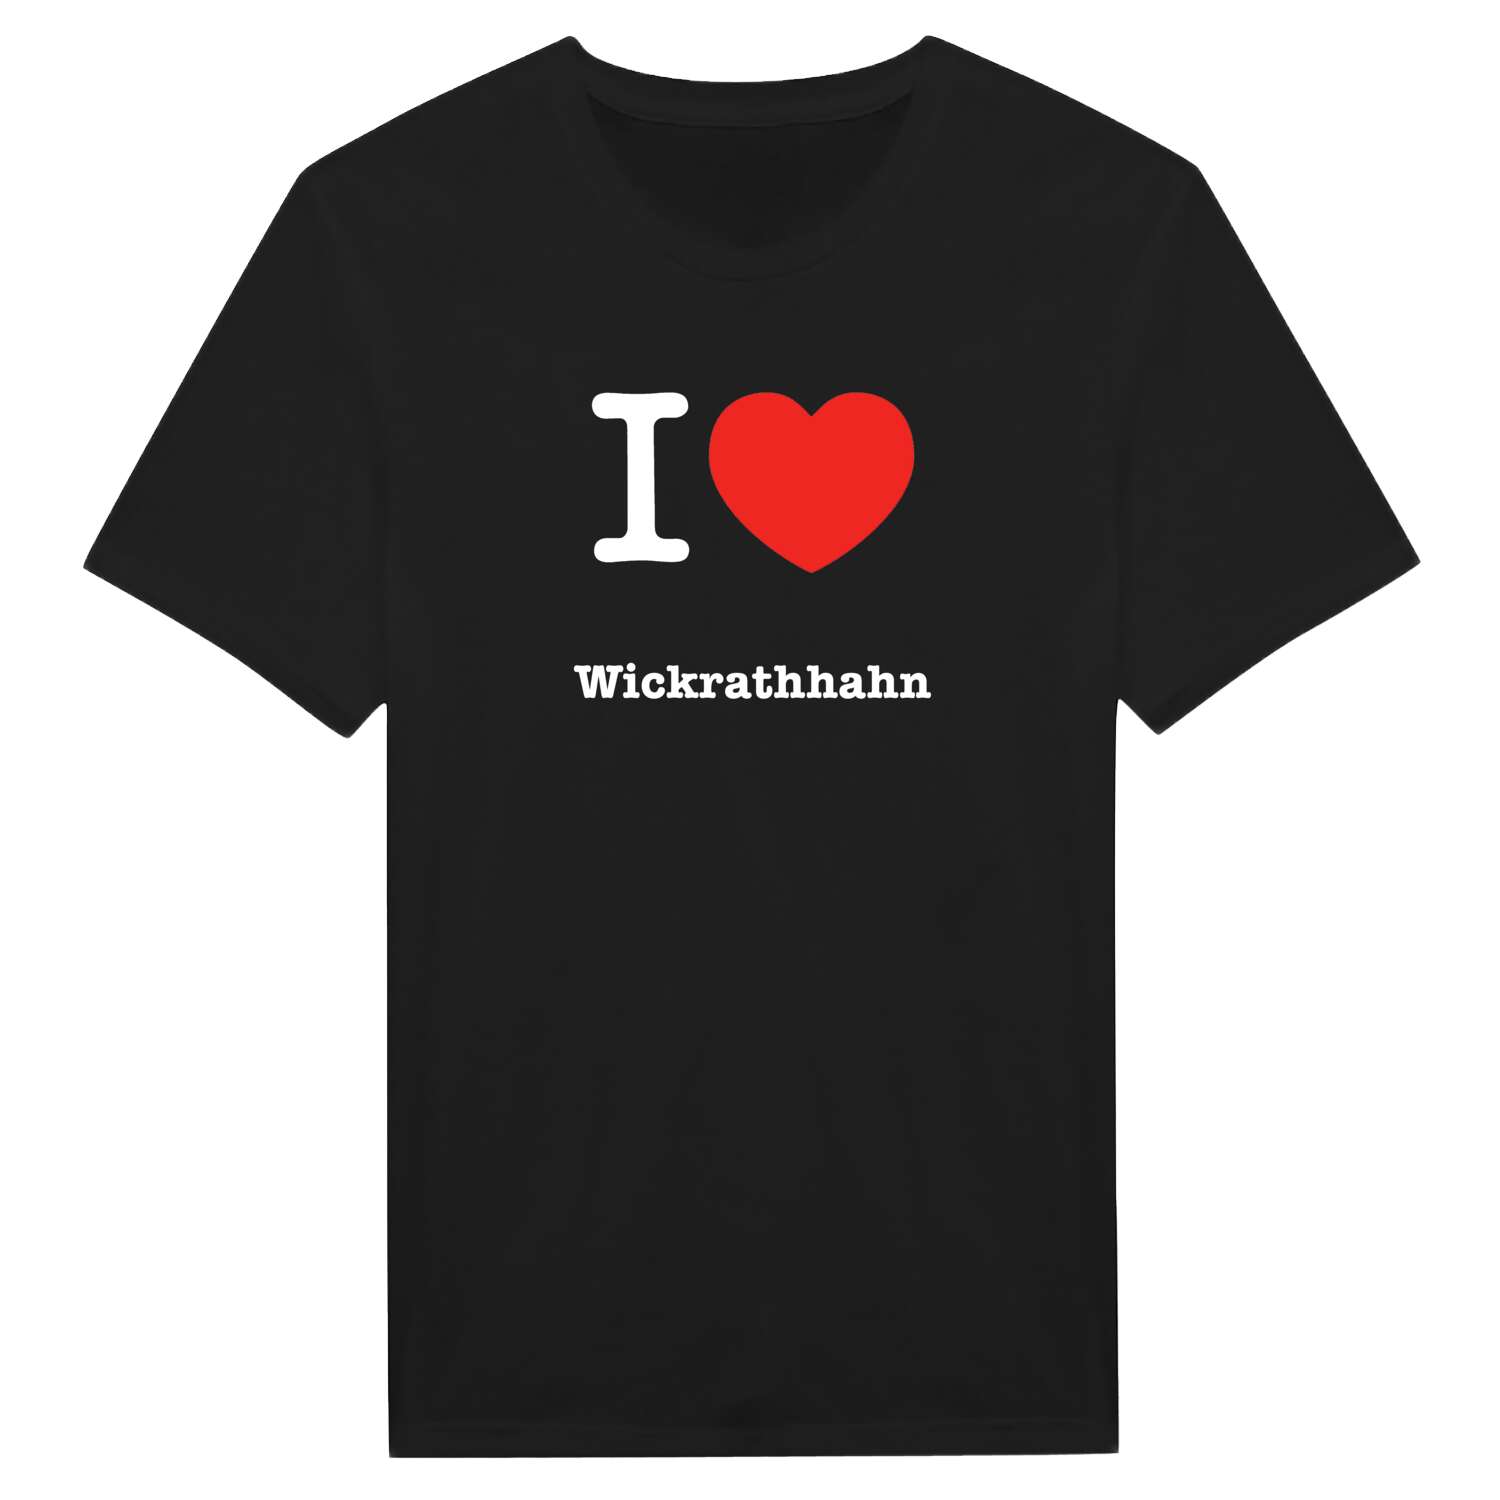 Wickrathhahn T-Shirt »I love«